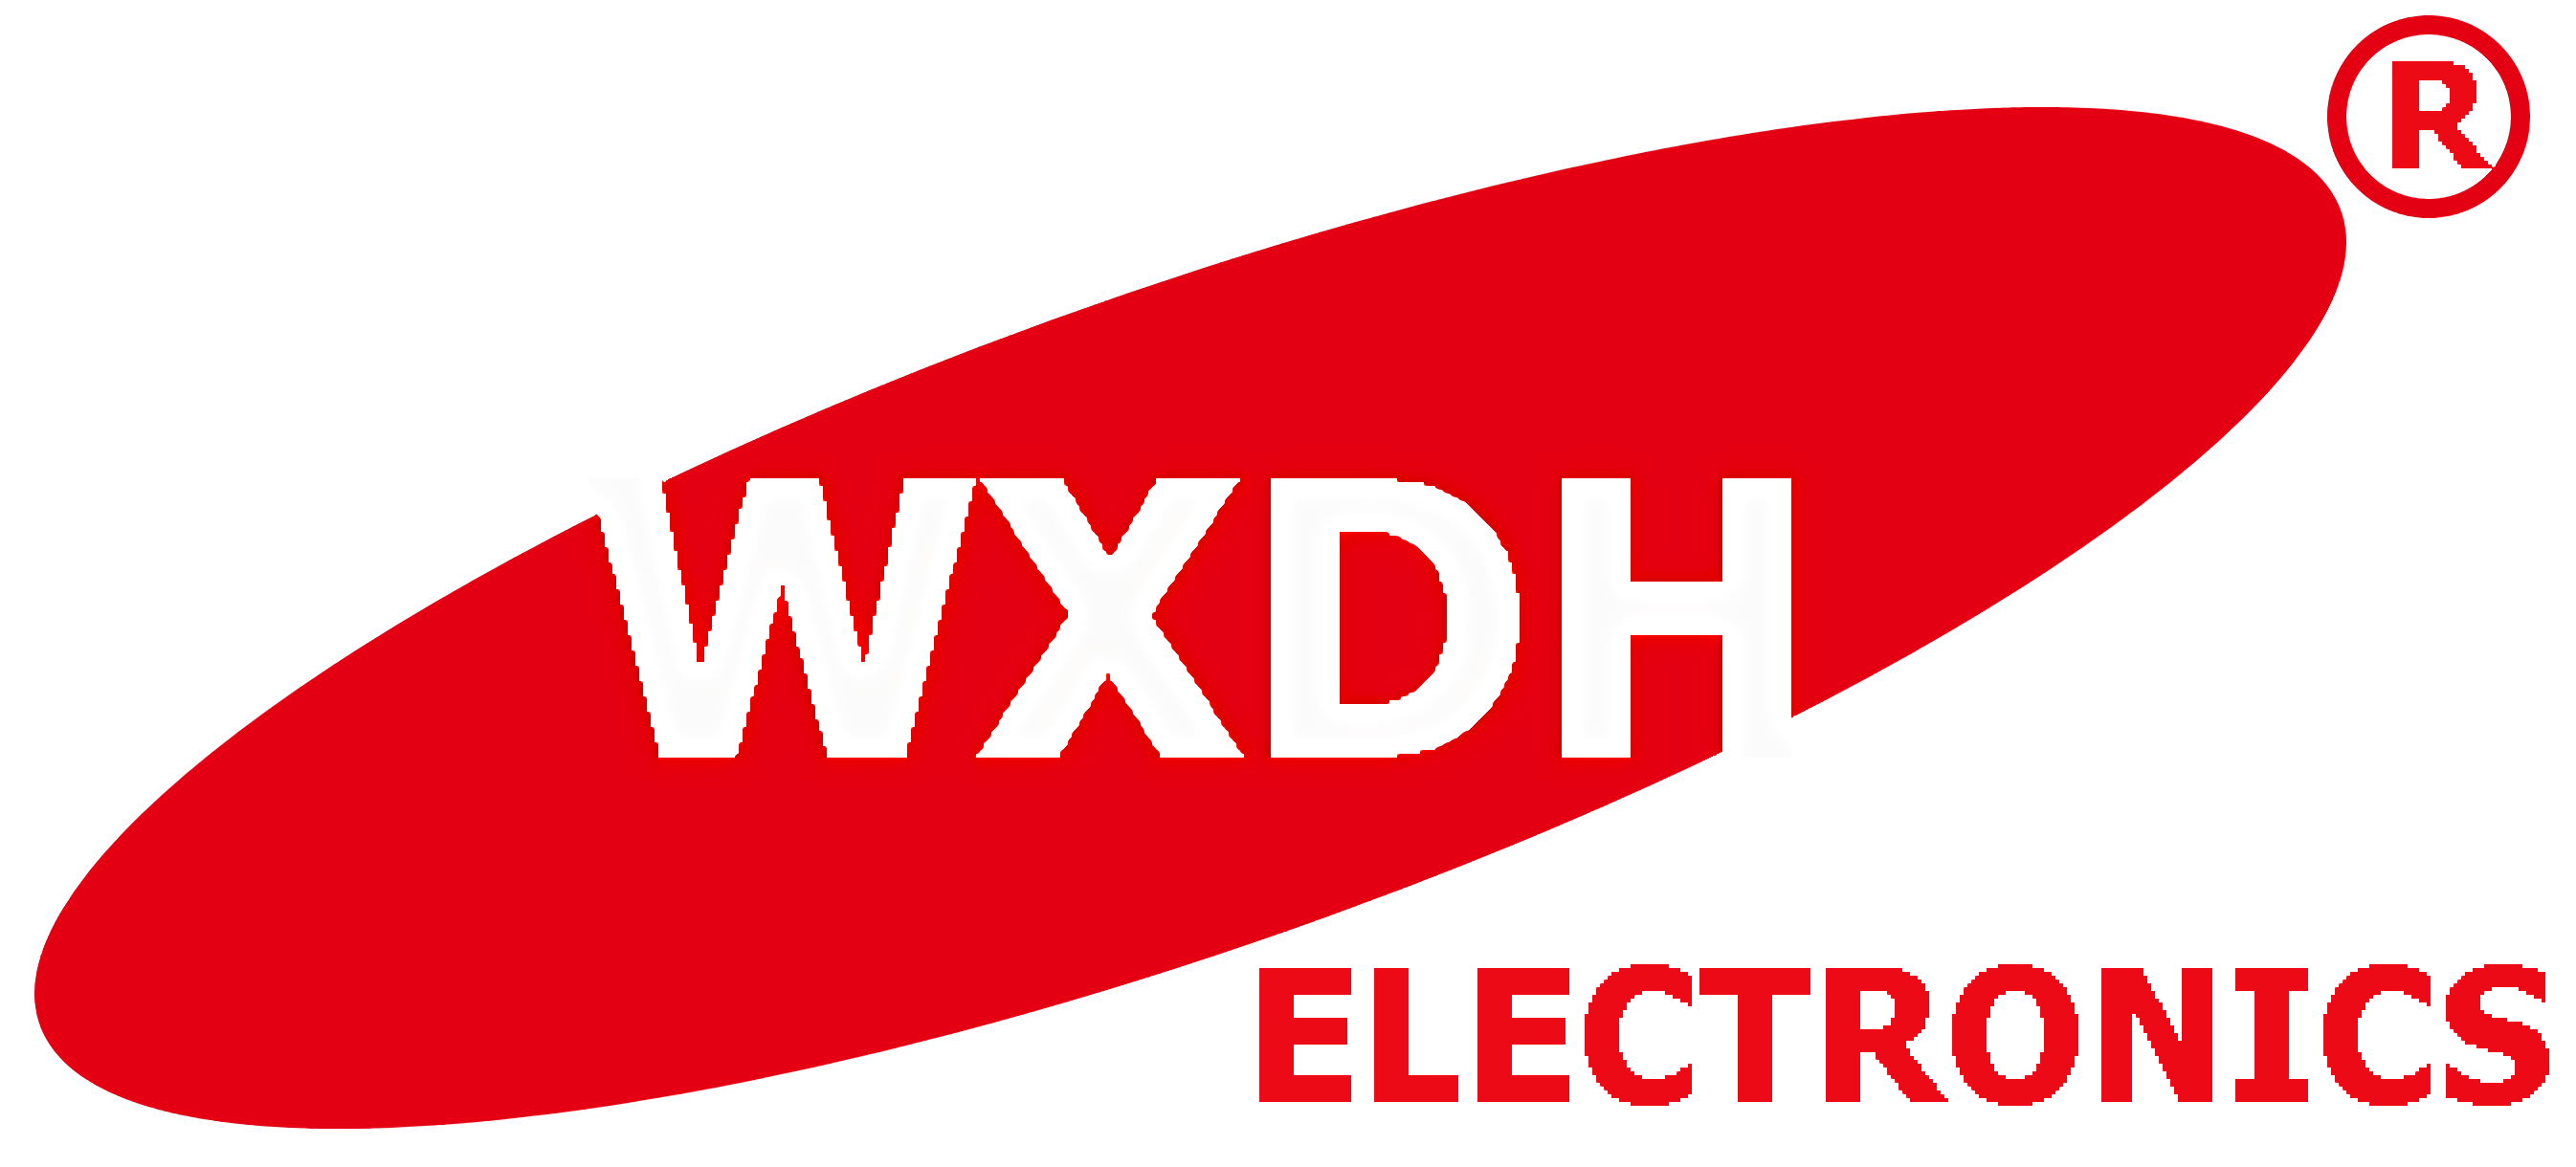 логотип wxdh